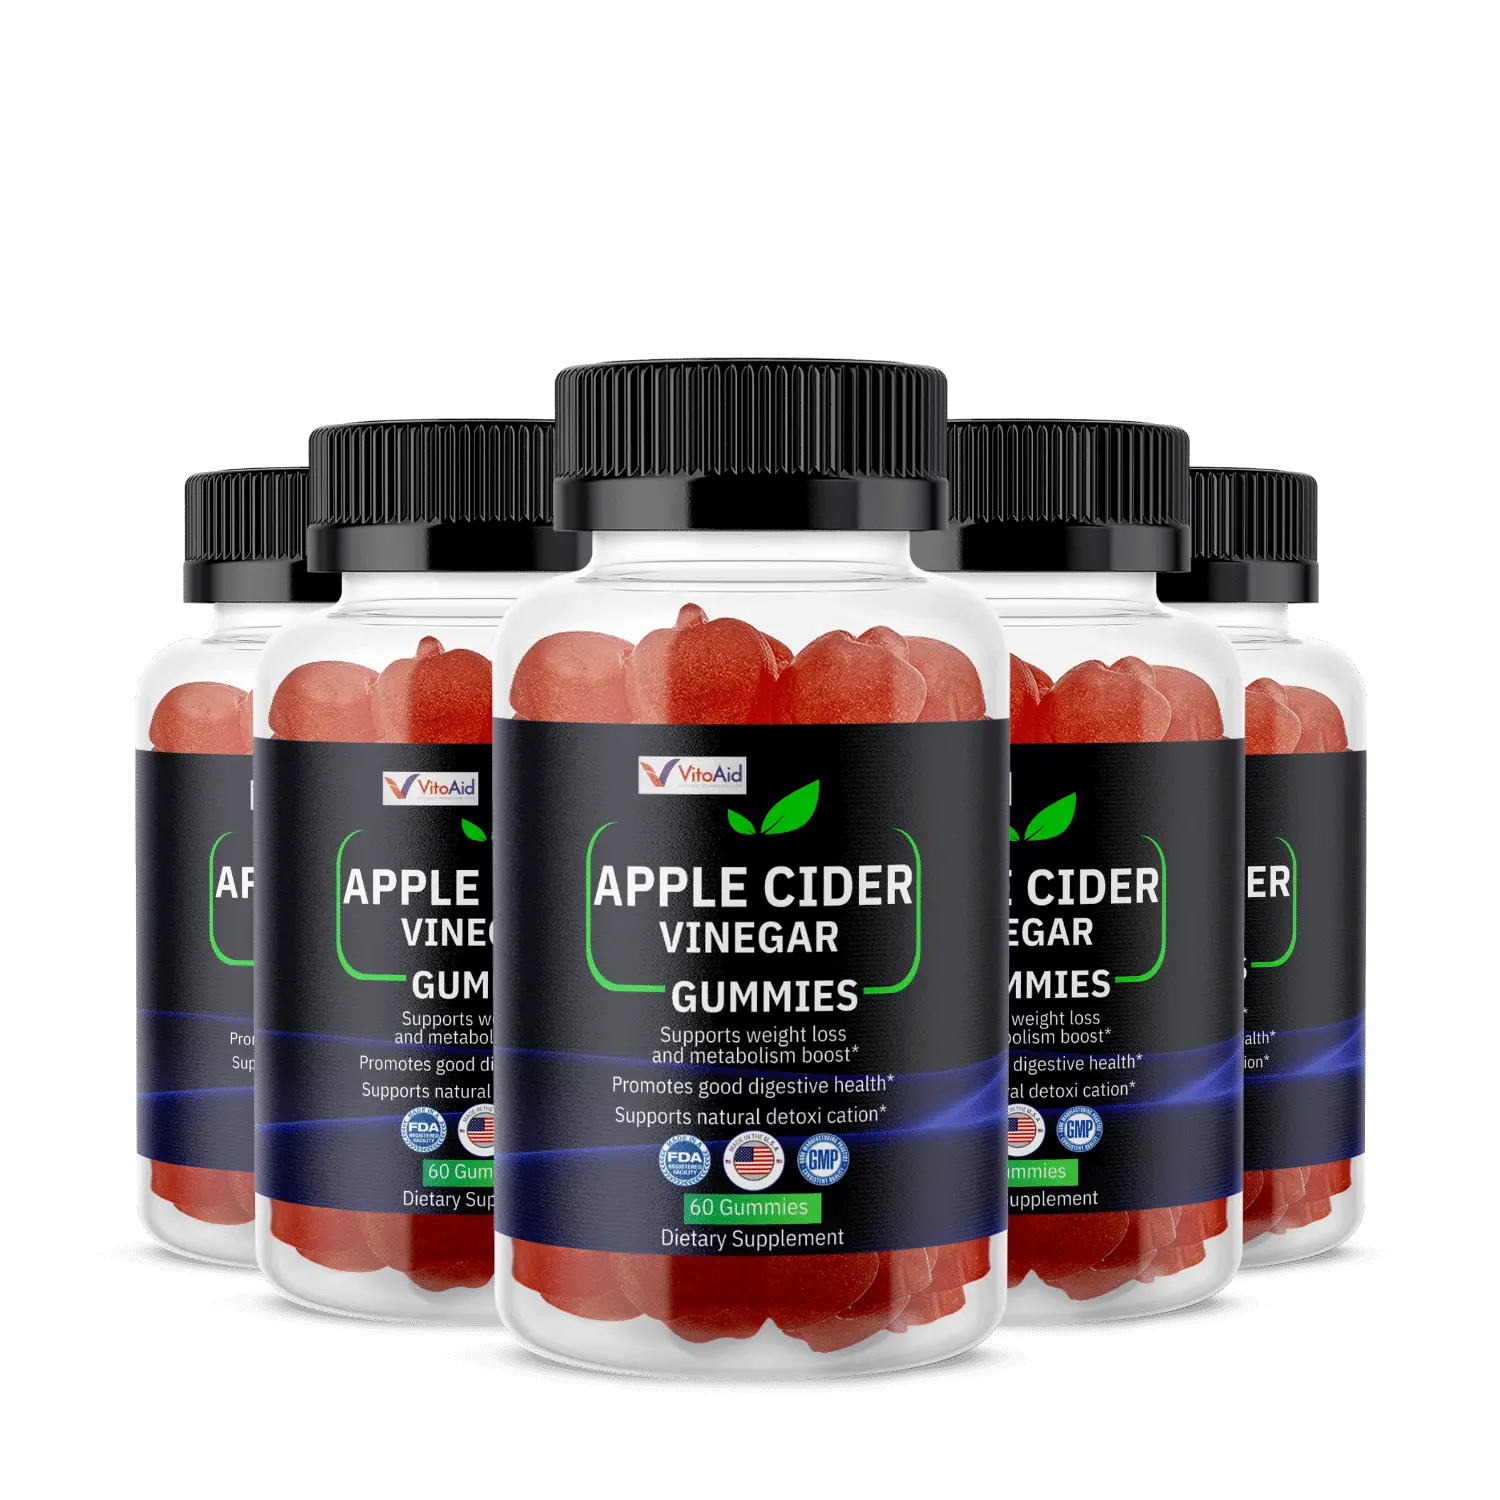 AVC Apple Cedar Vinegar Gummies Bundle 6-Month Supply